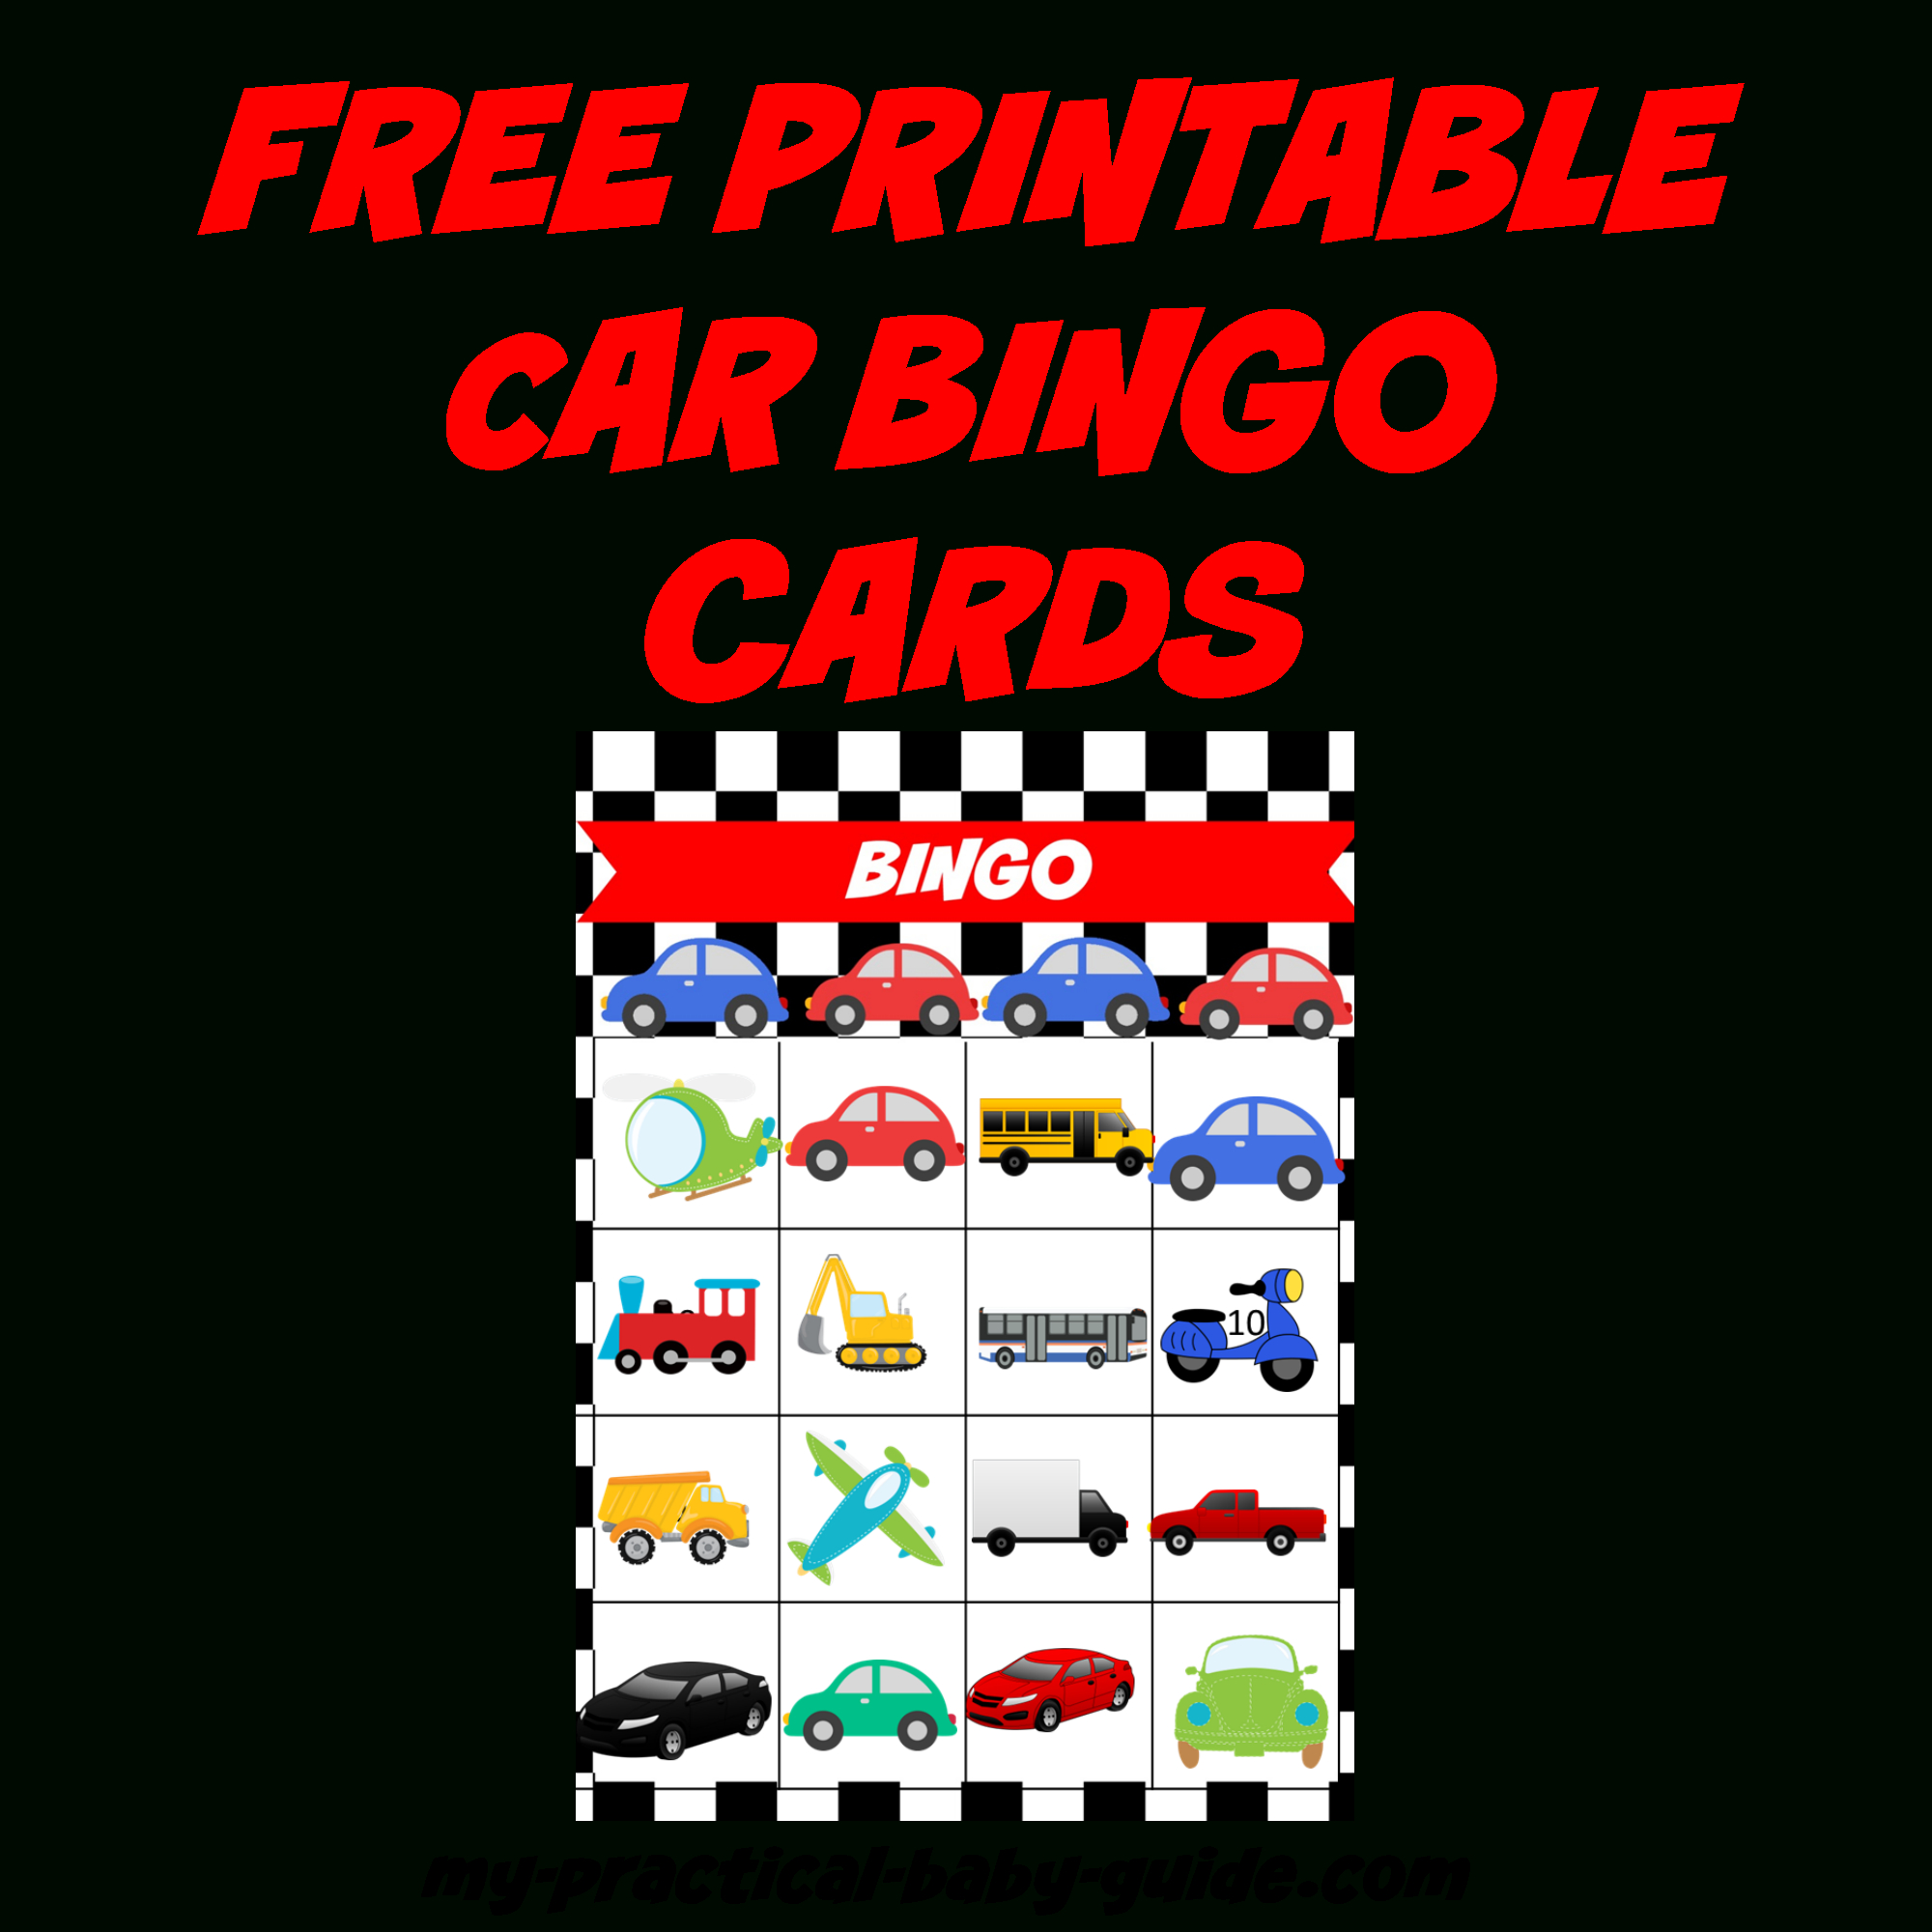 Coolest Car Birthday Ideas - My Practical Birthday Guide In 2019 - Free Printable Car Bingo